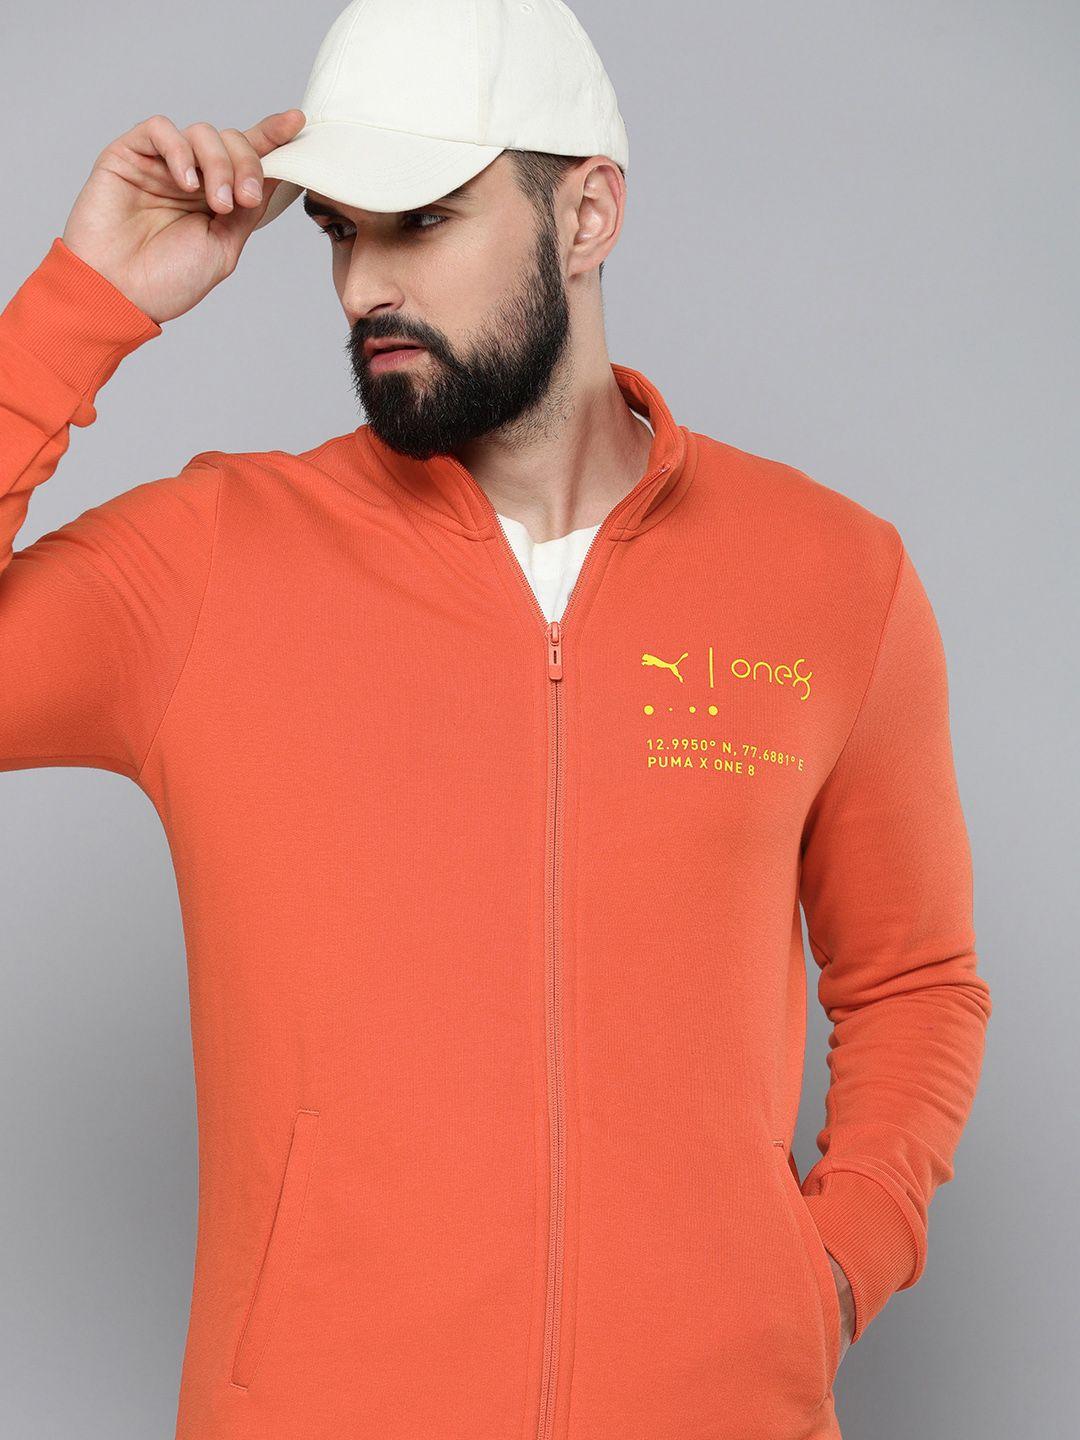 one8 x puma brand logo printed slim fit outdoor sporty jacket